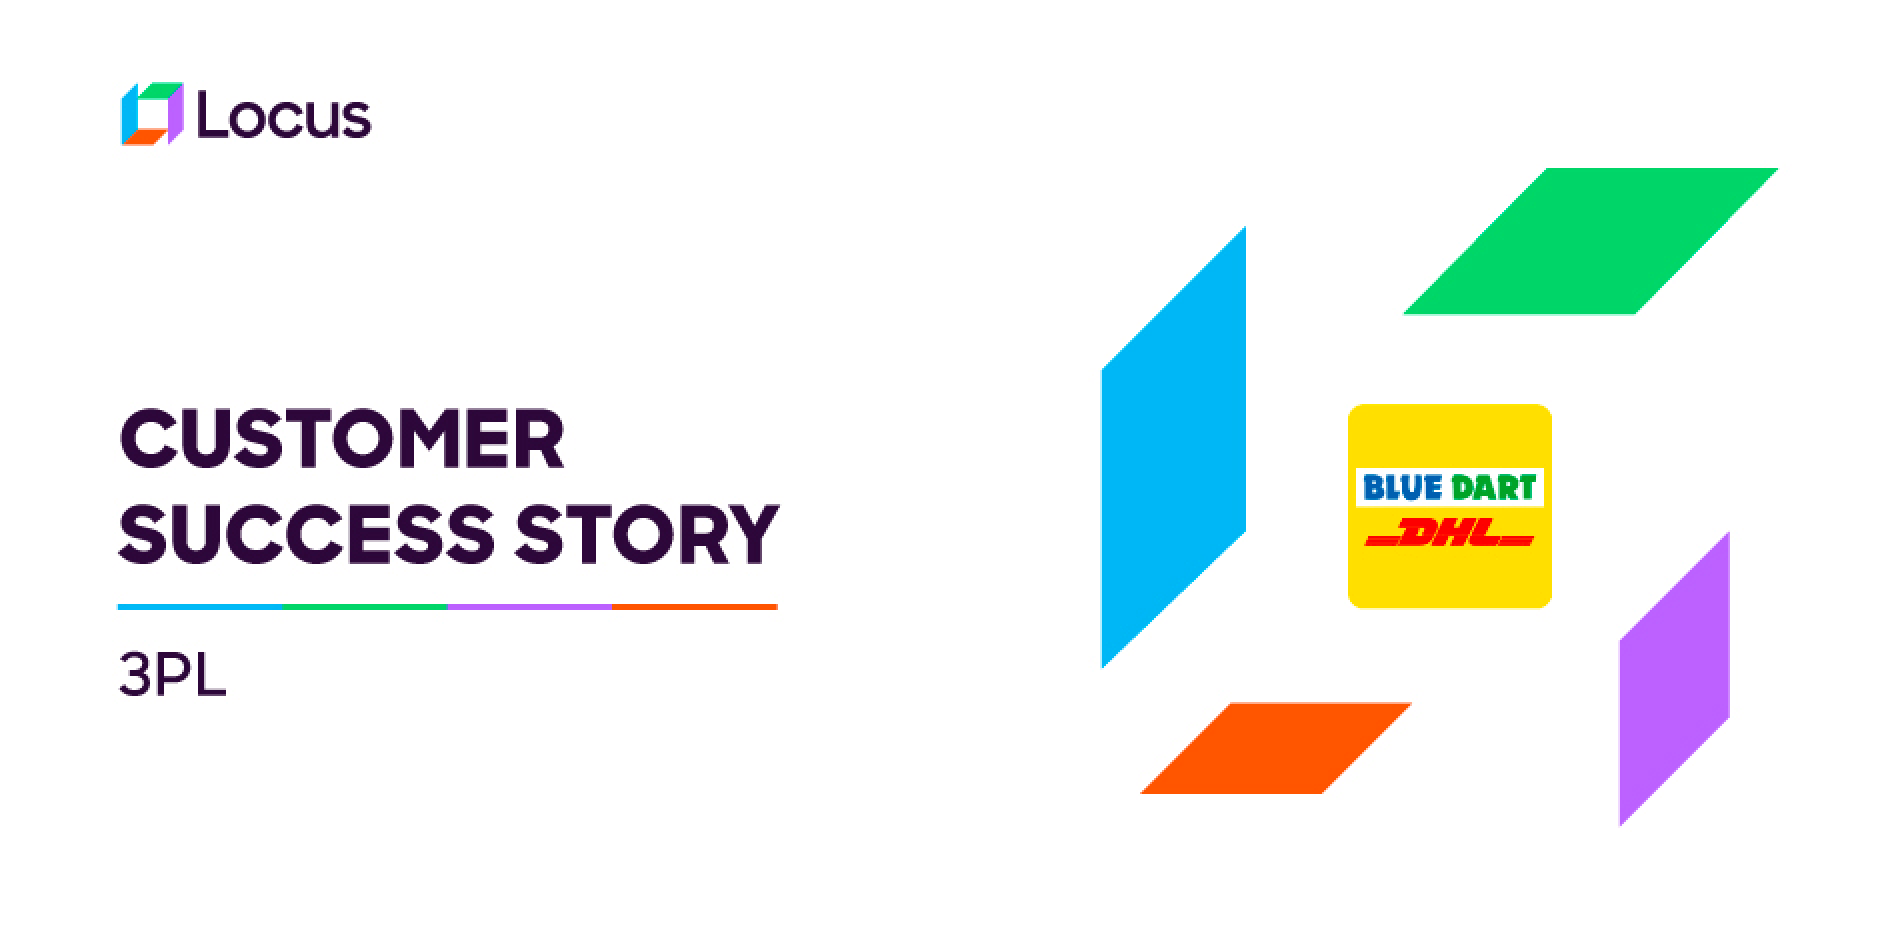 bluedart-dhl-customer-success-story